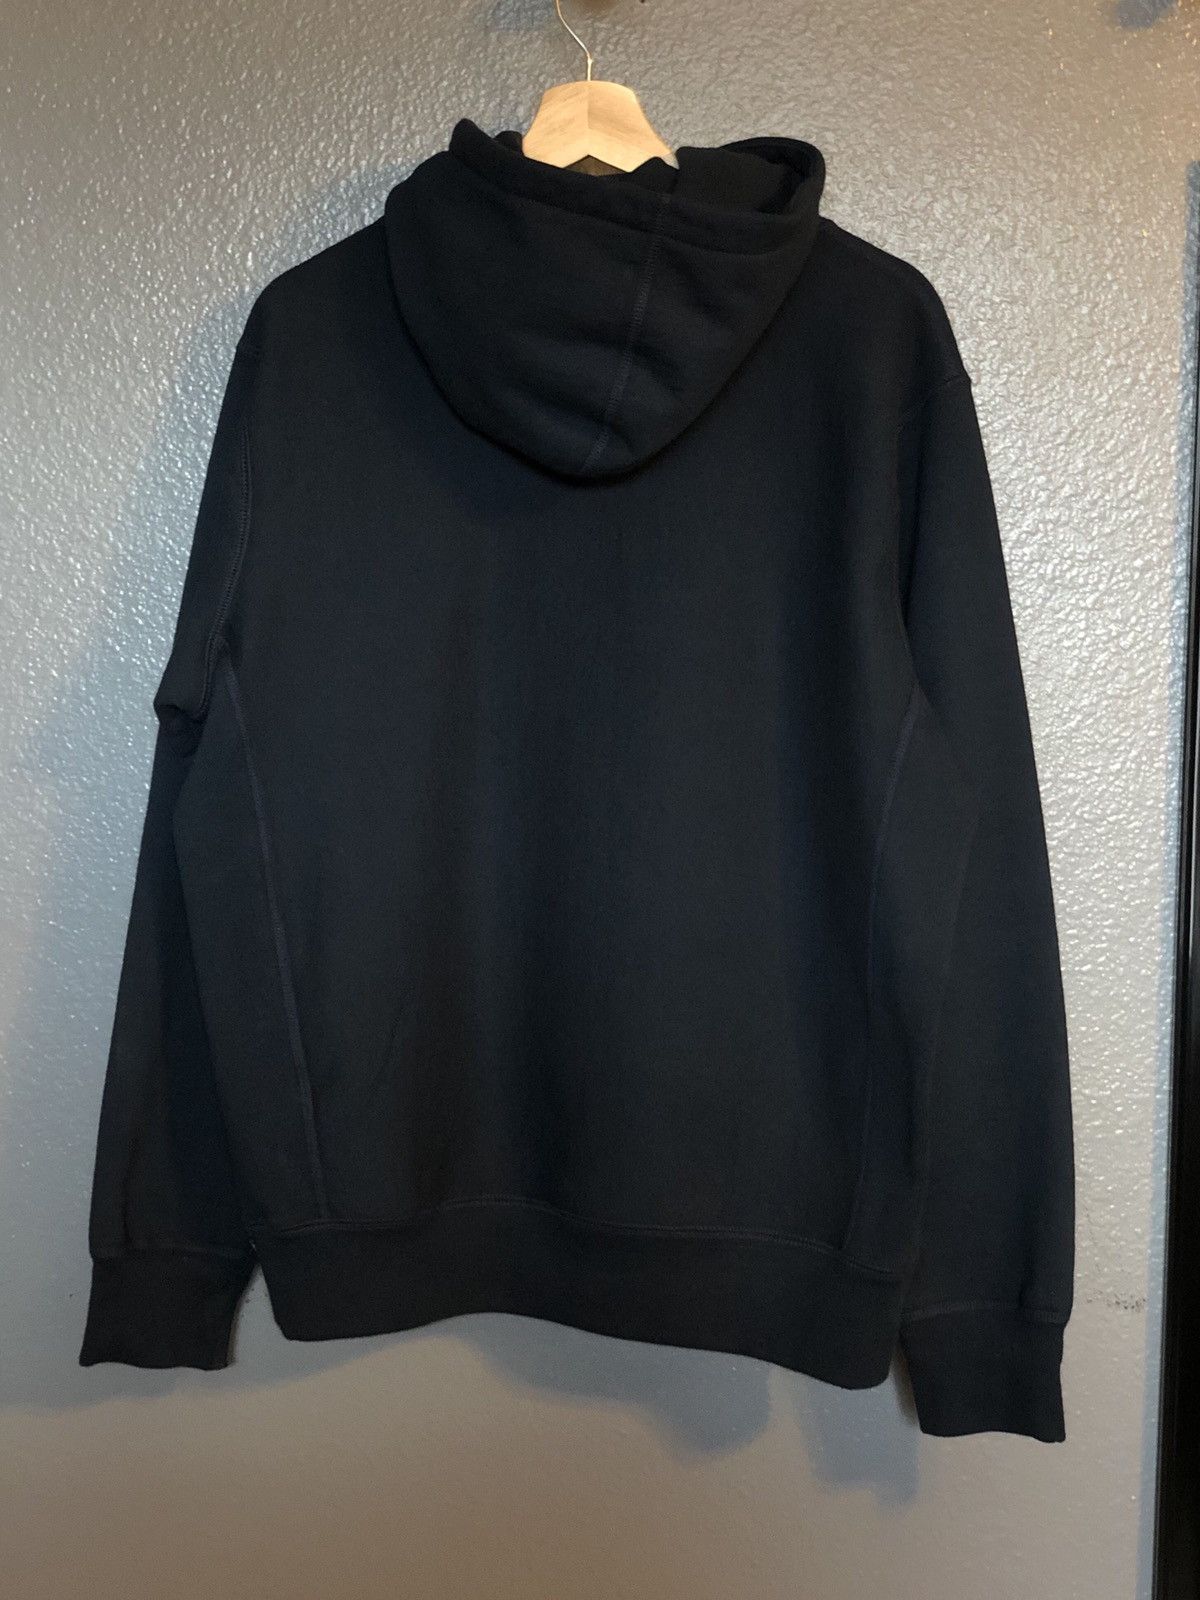 Supreme Supreme Bandana Box Logo Hooded Sweatshirt, Medium in Navy Size US M / EU 48-50 / 2 - 2 Preview